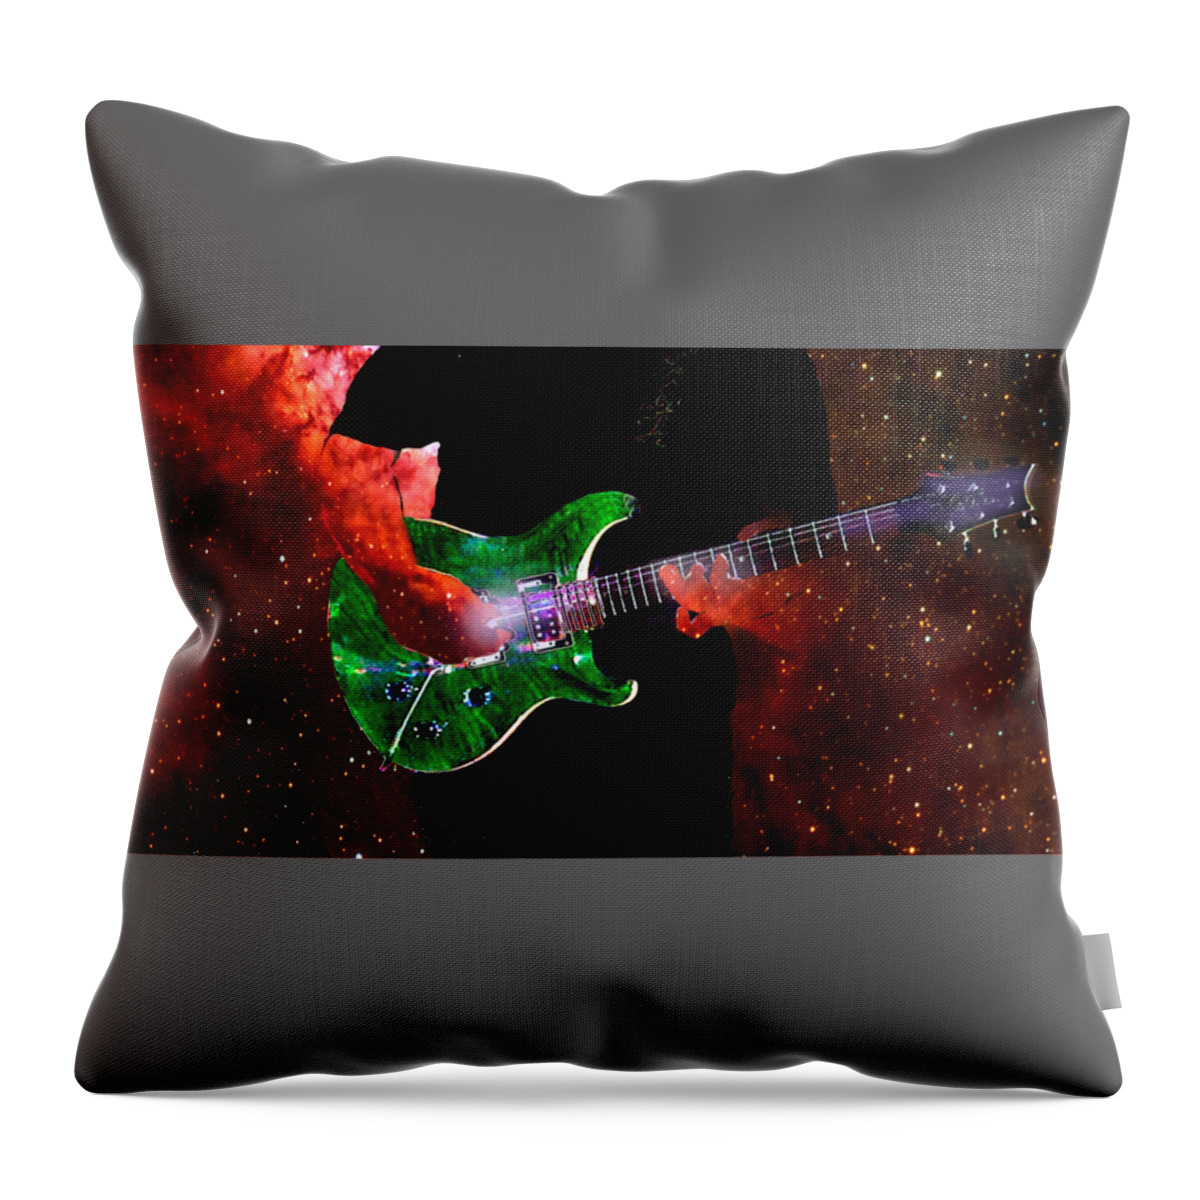 Guitar Throw Pillow featuring the photograph Guitar nebula by Ric Rice